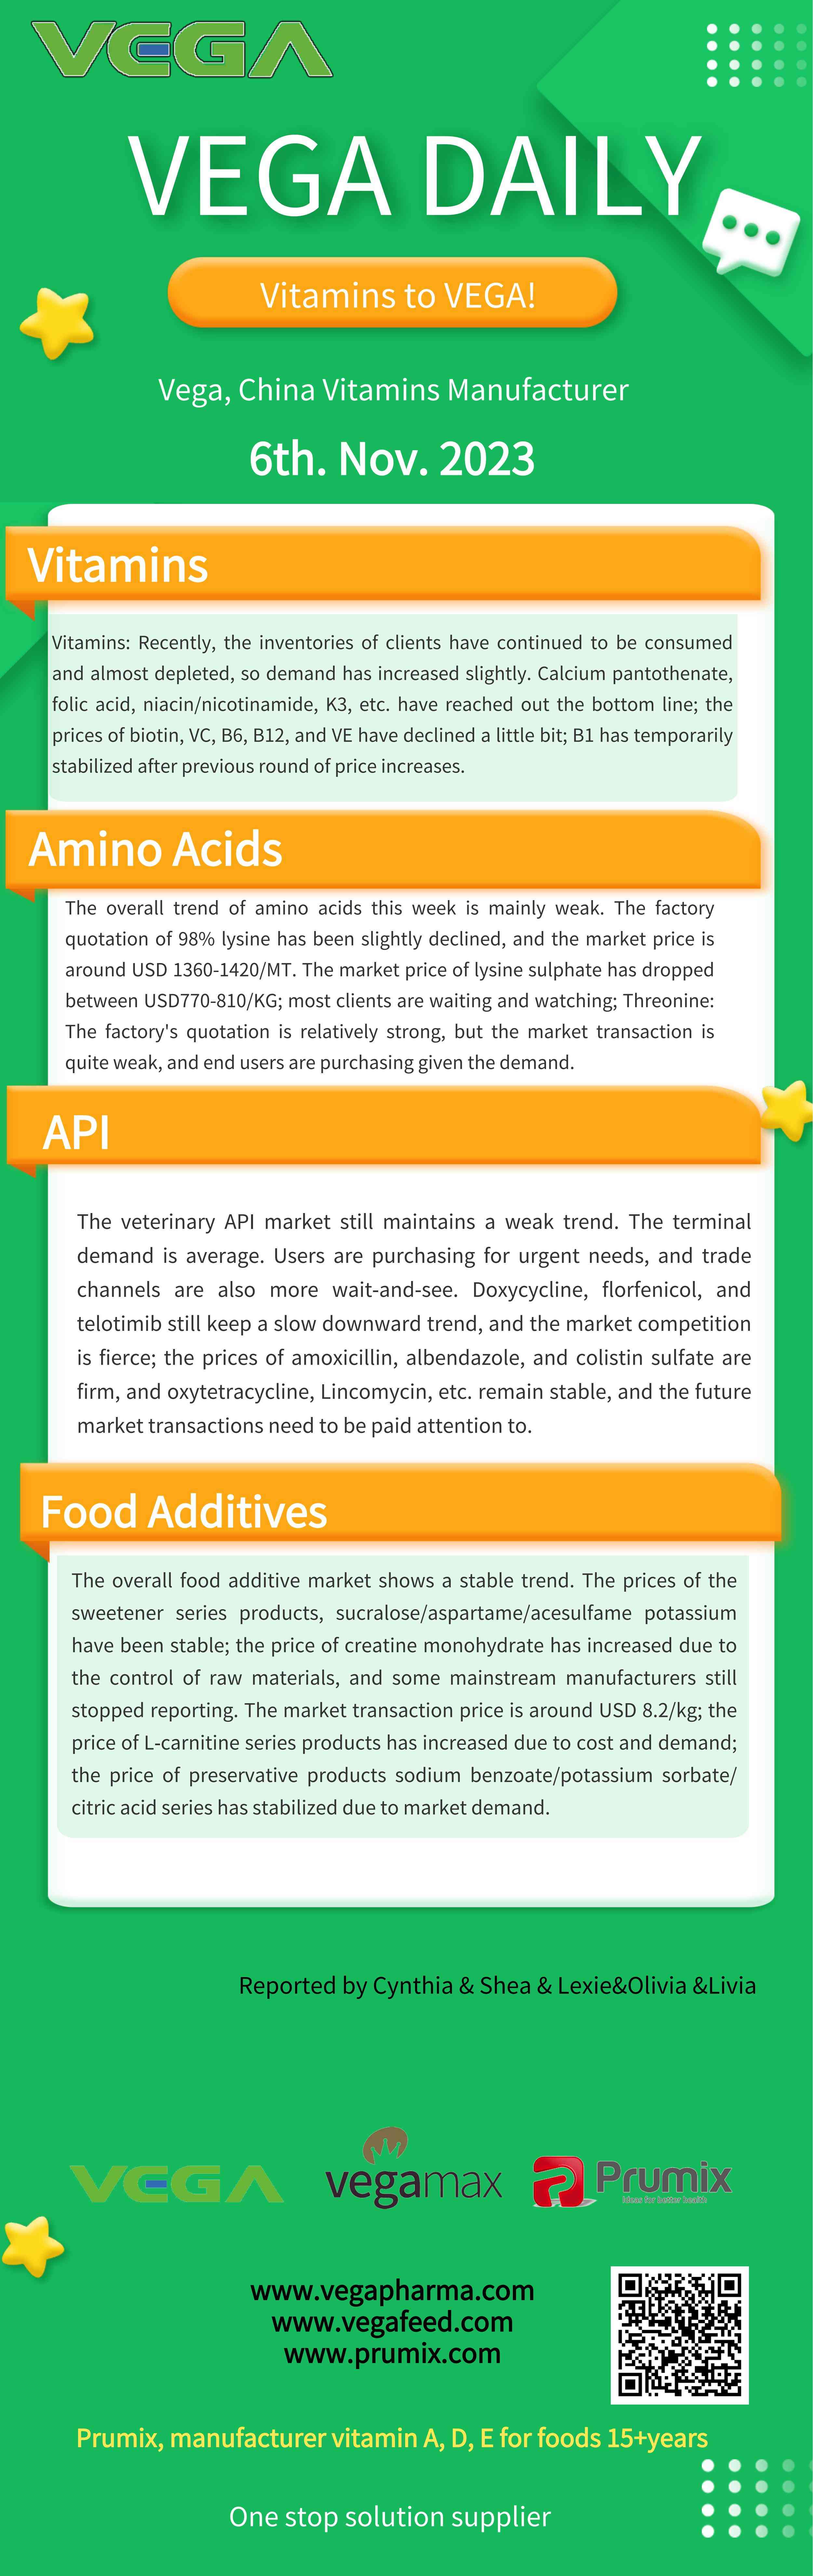 Vega Daily Dated on Nov 6th 2023 Vitamin  Amino Acid API Food Additives.jpg